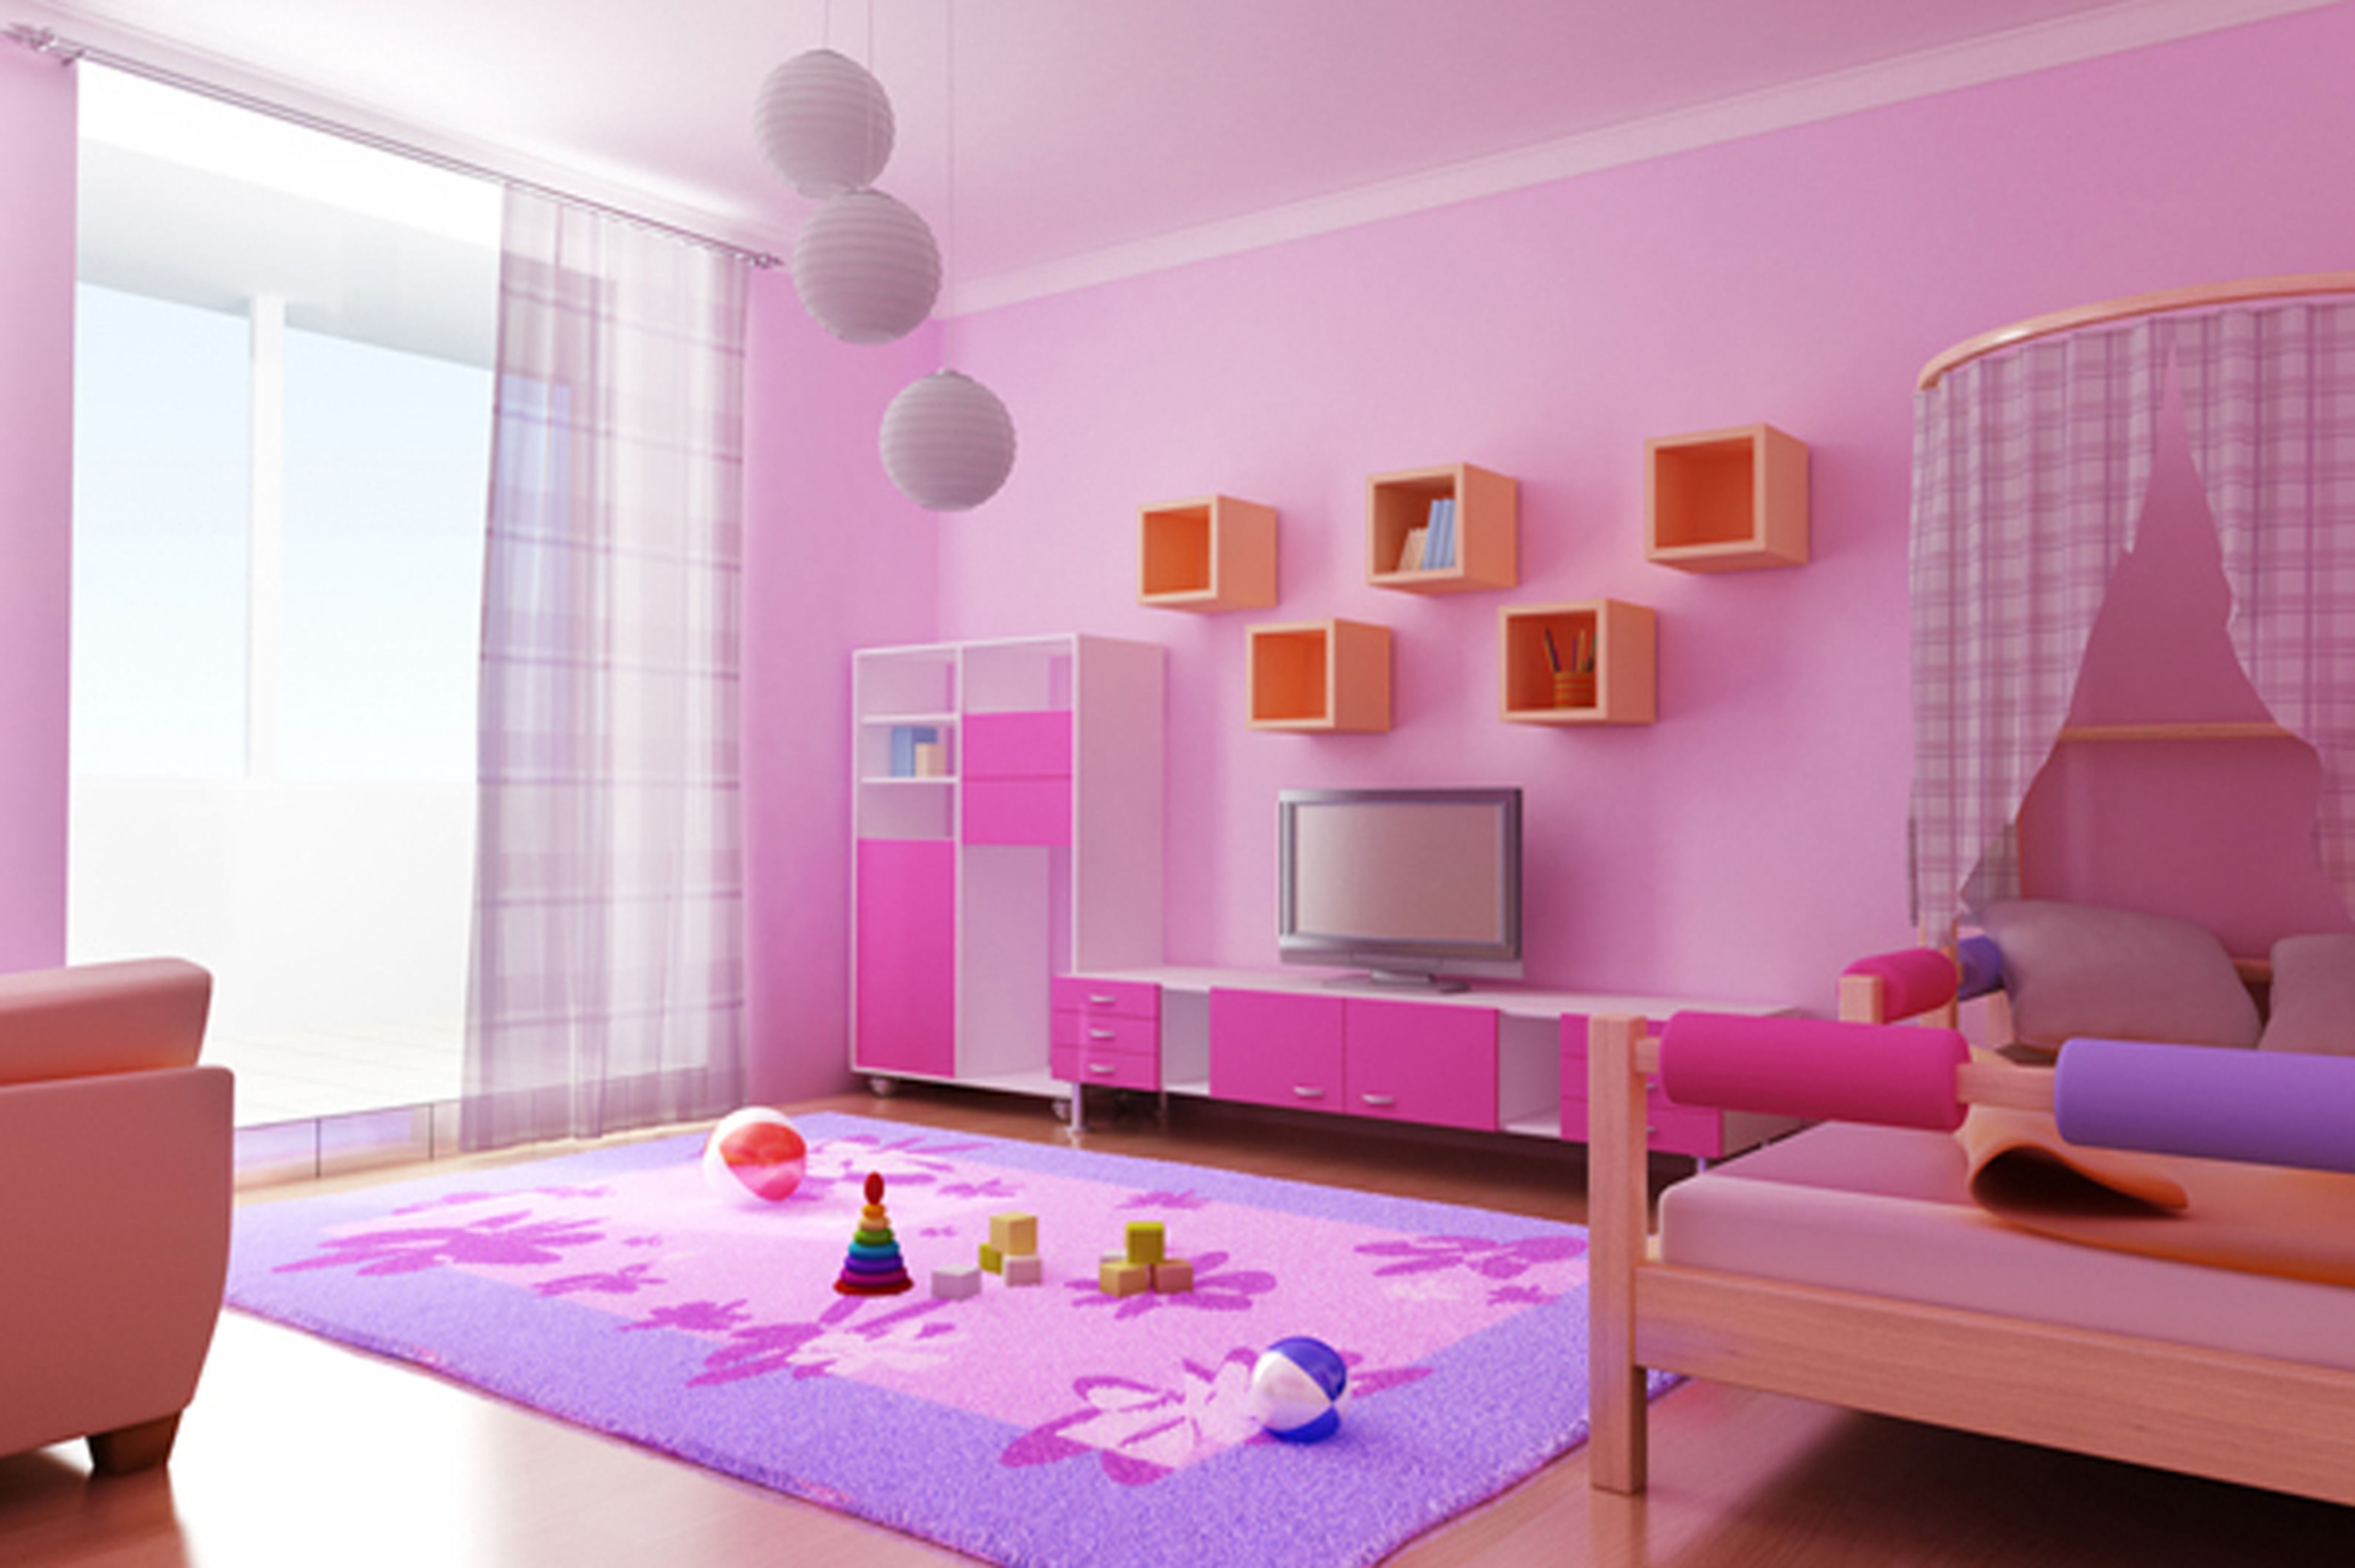 Нужна новая комната. Интерьер комнаты. Интерьер детской комнаты. Розовый интерьер комнаты. Интерьер комнаты для девочки.